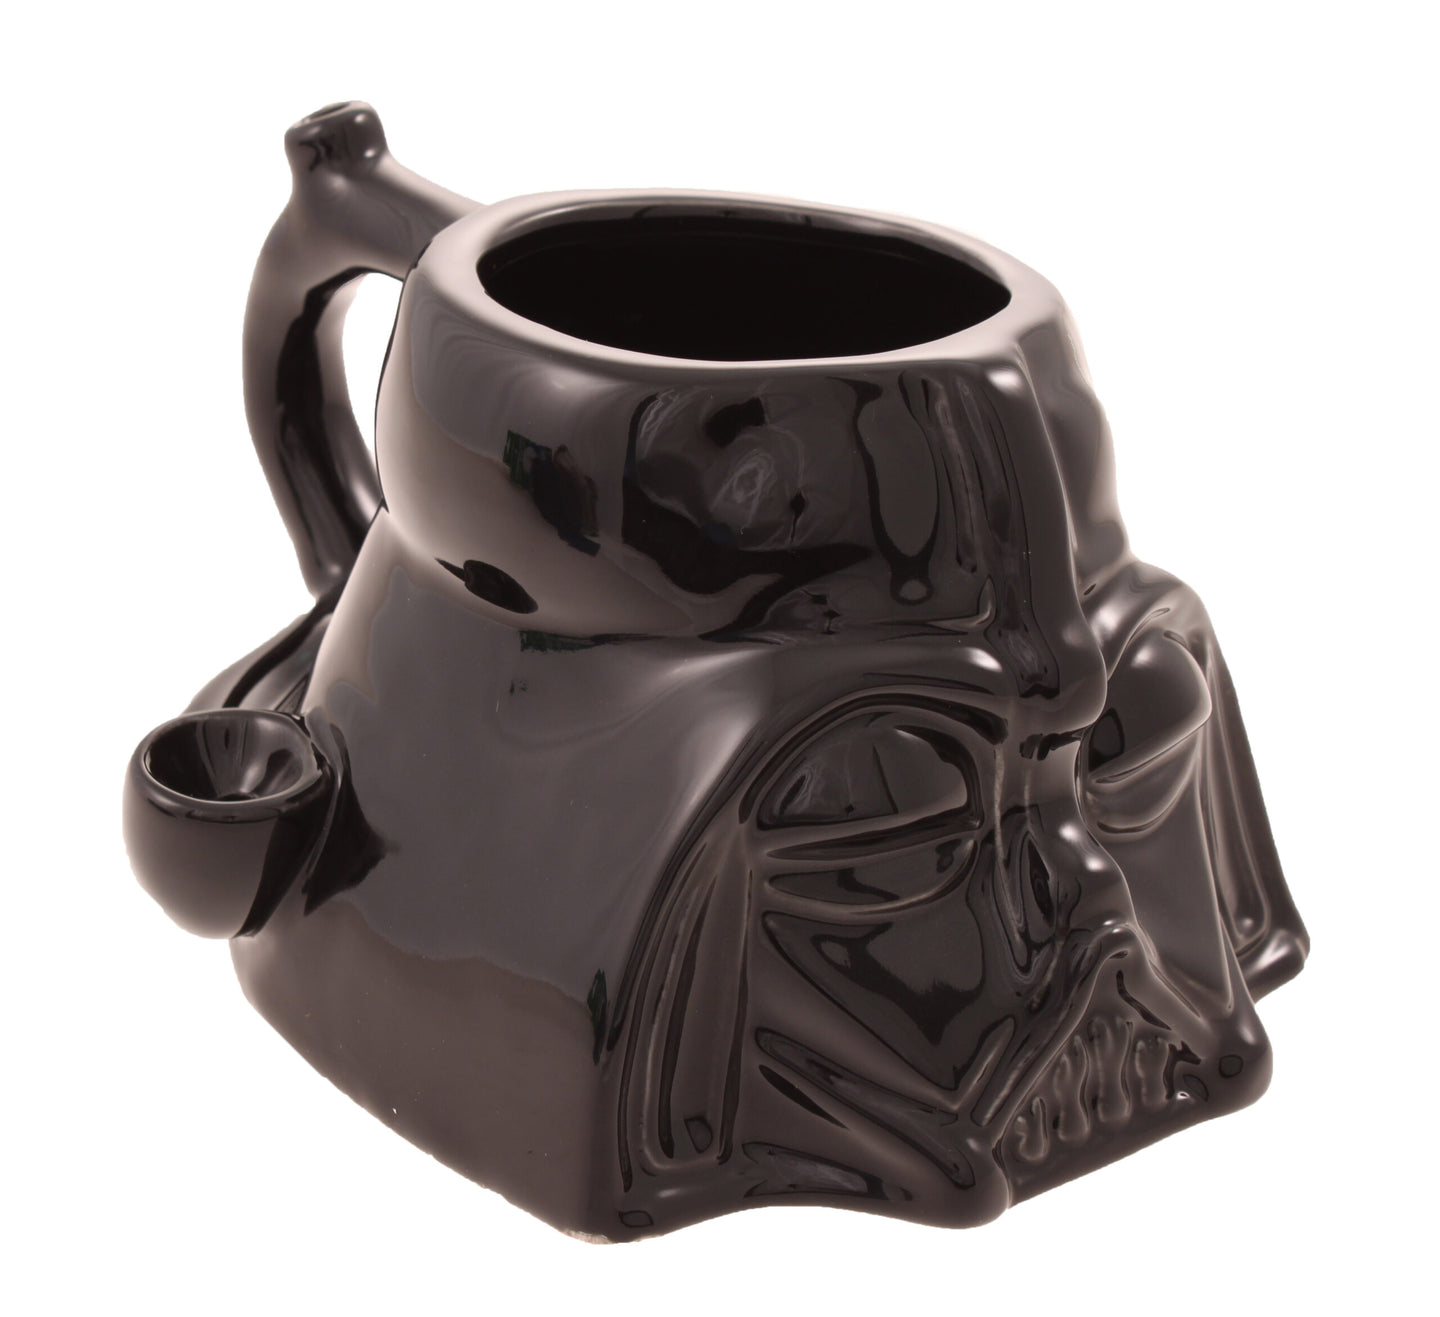 Darth Vader Wake & Bake Mug